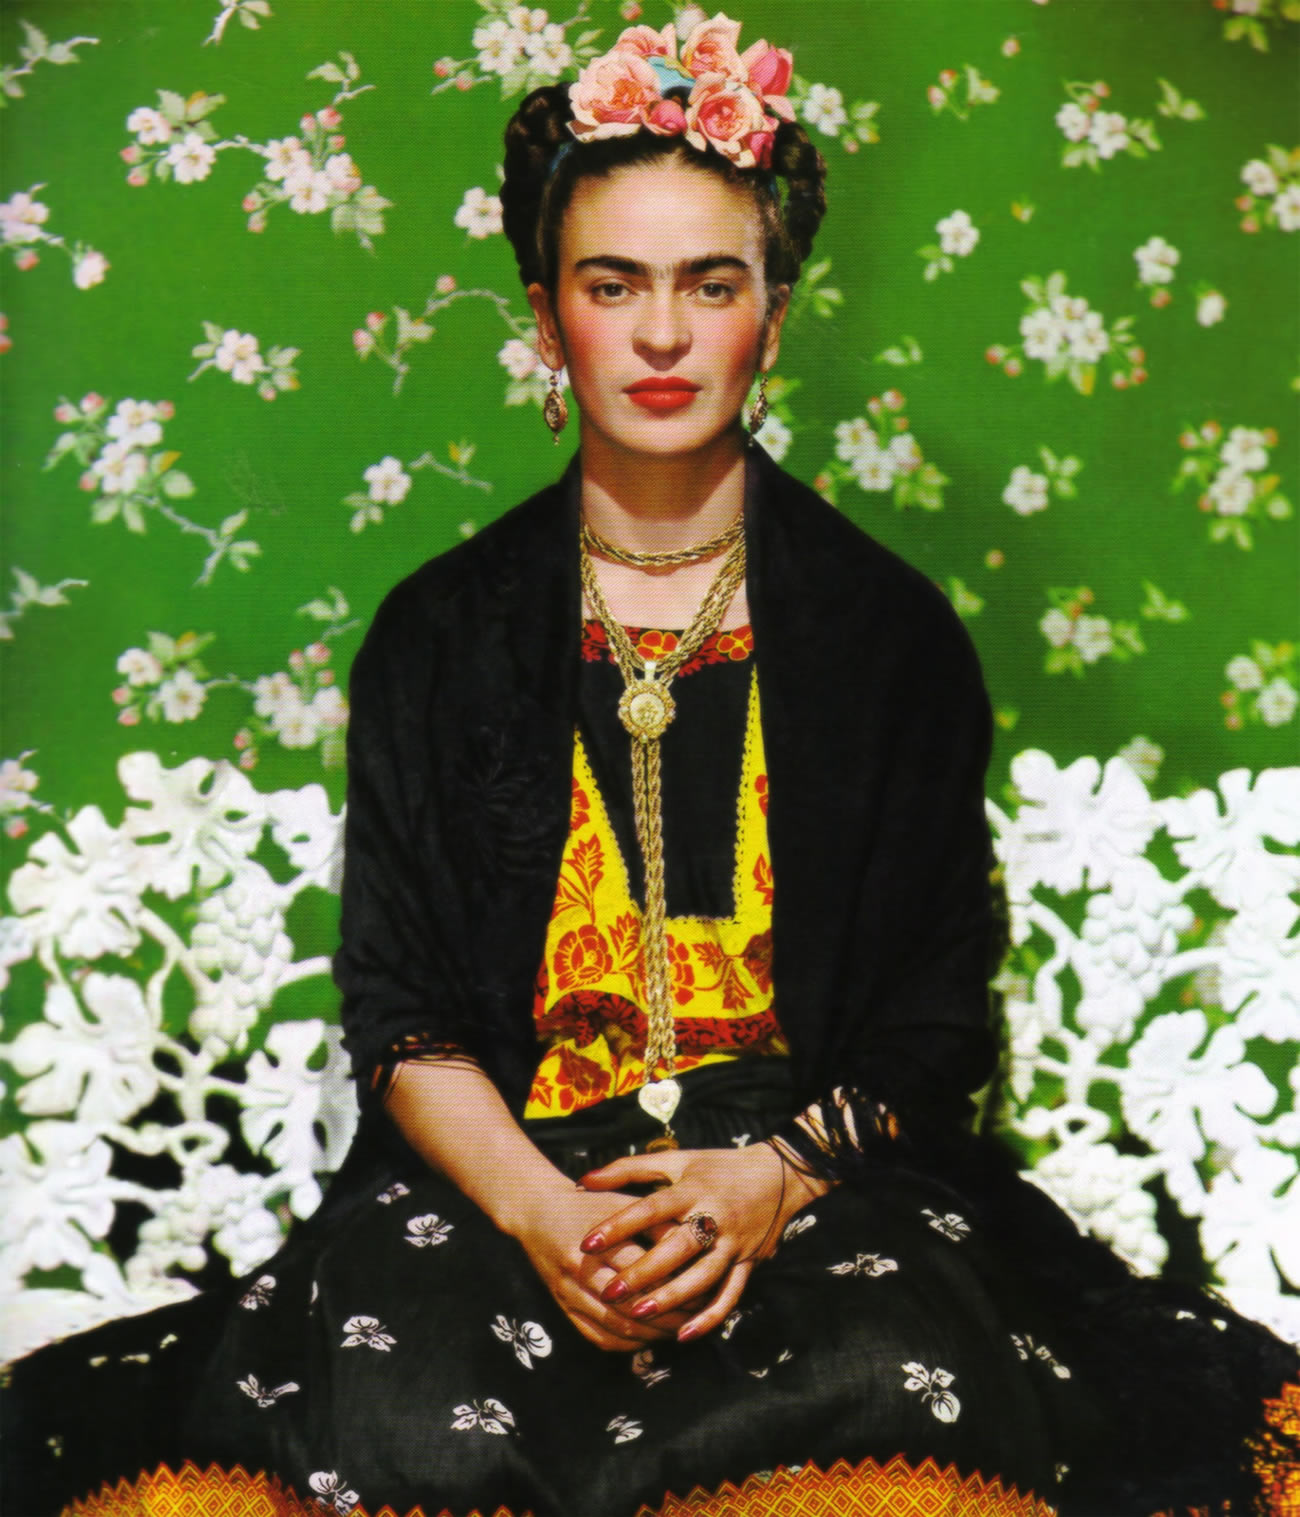 frida kahlo artist portrait, green wallpaper with flowers